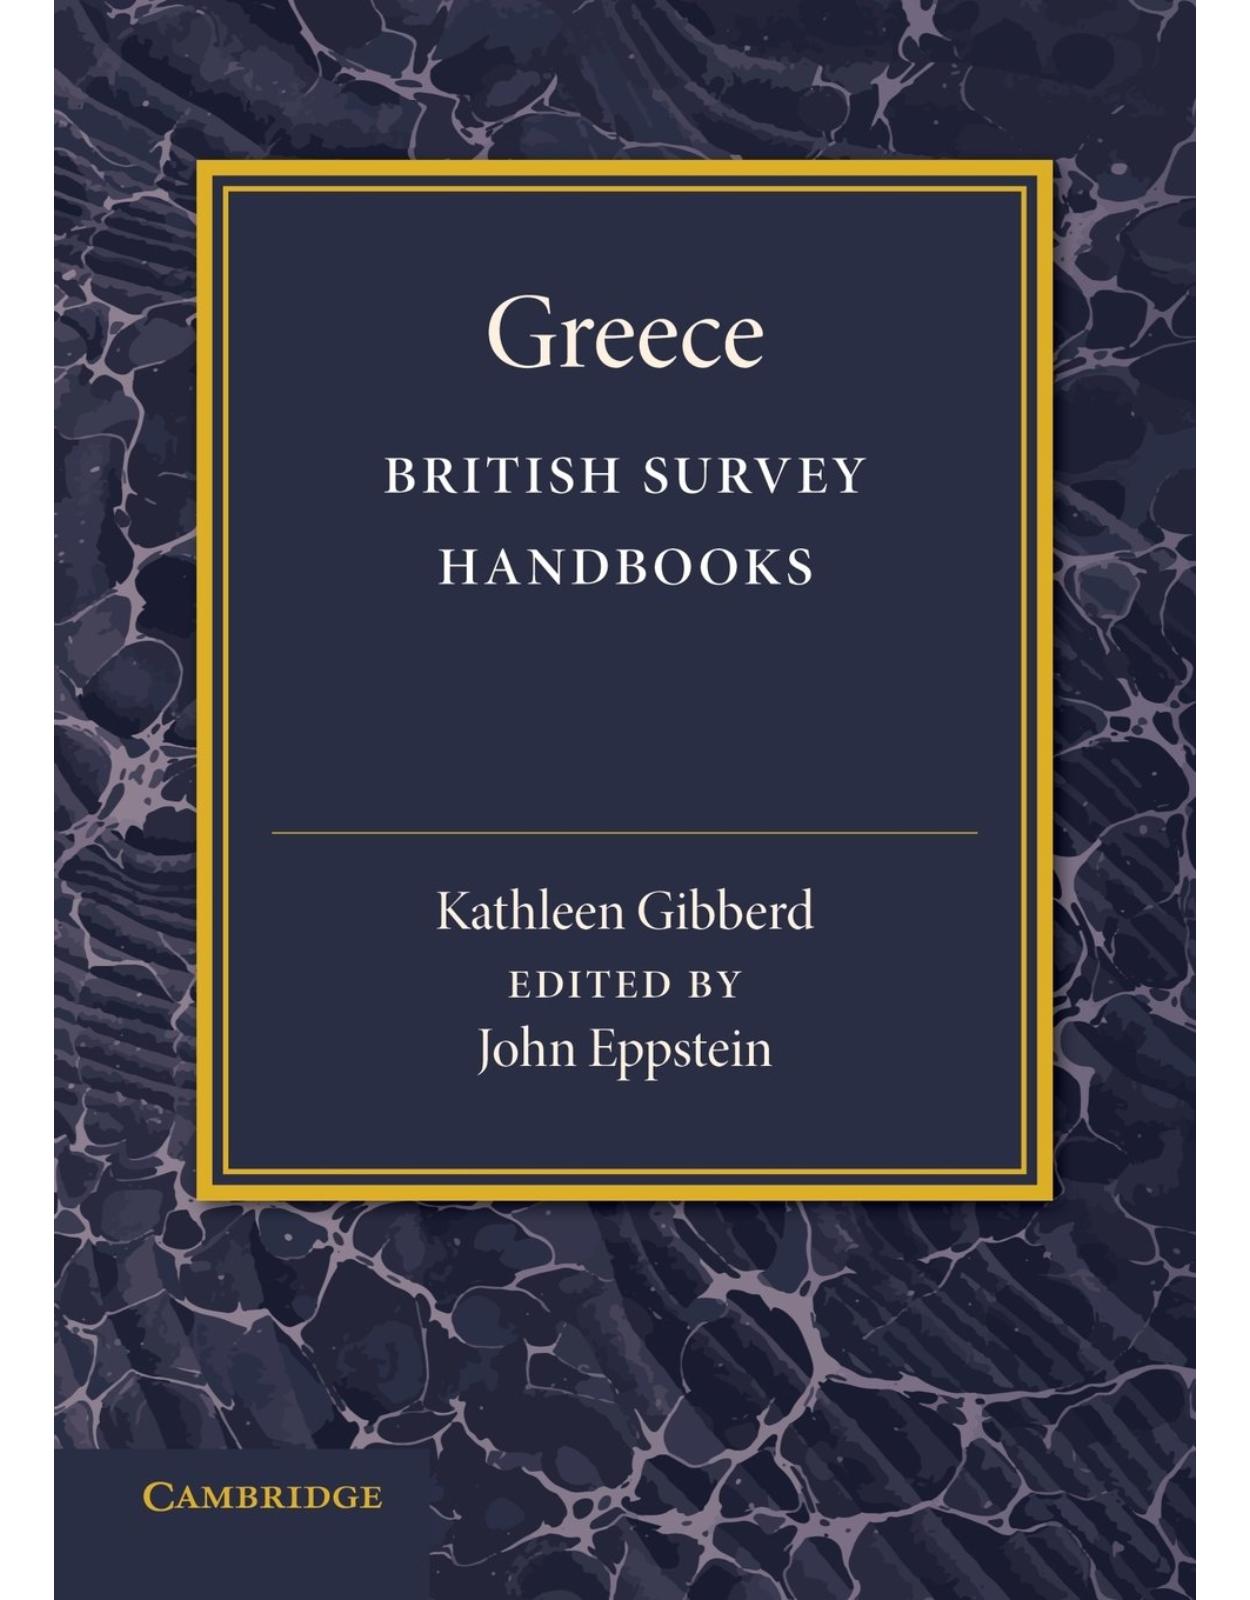 Greece (British Survey Handbooks)